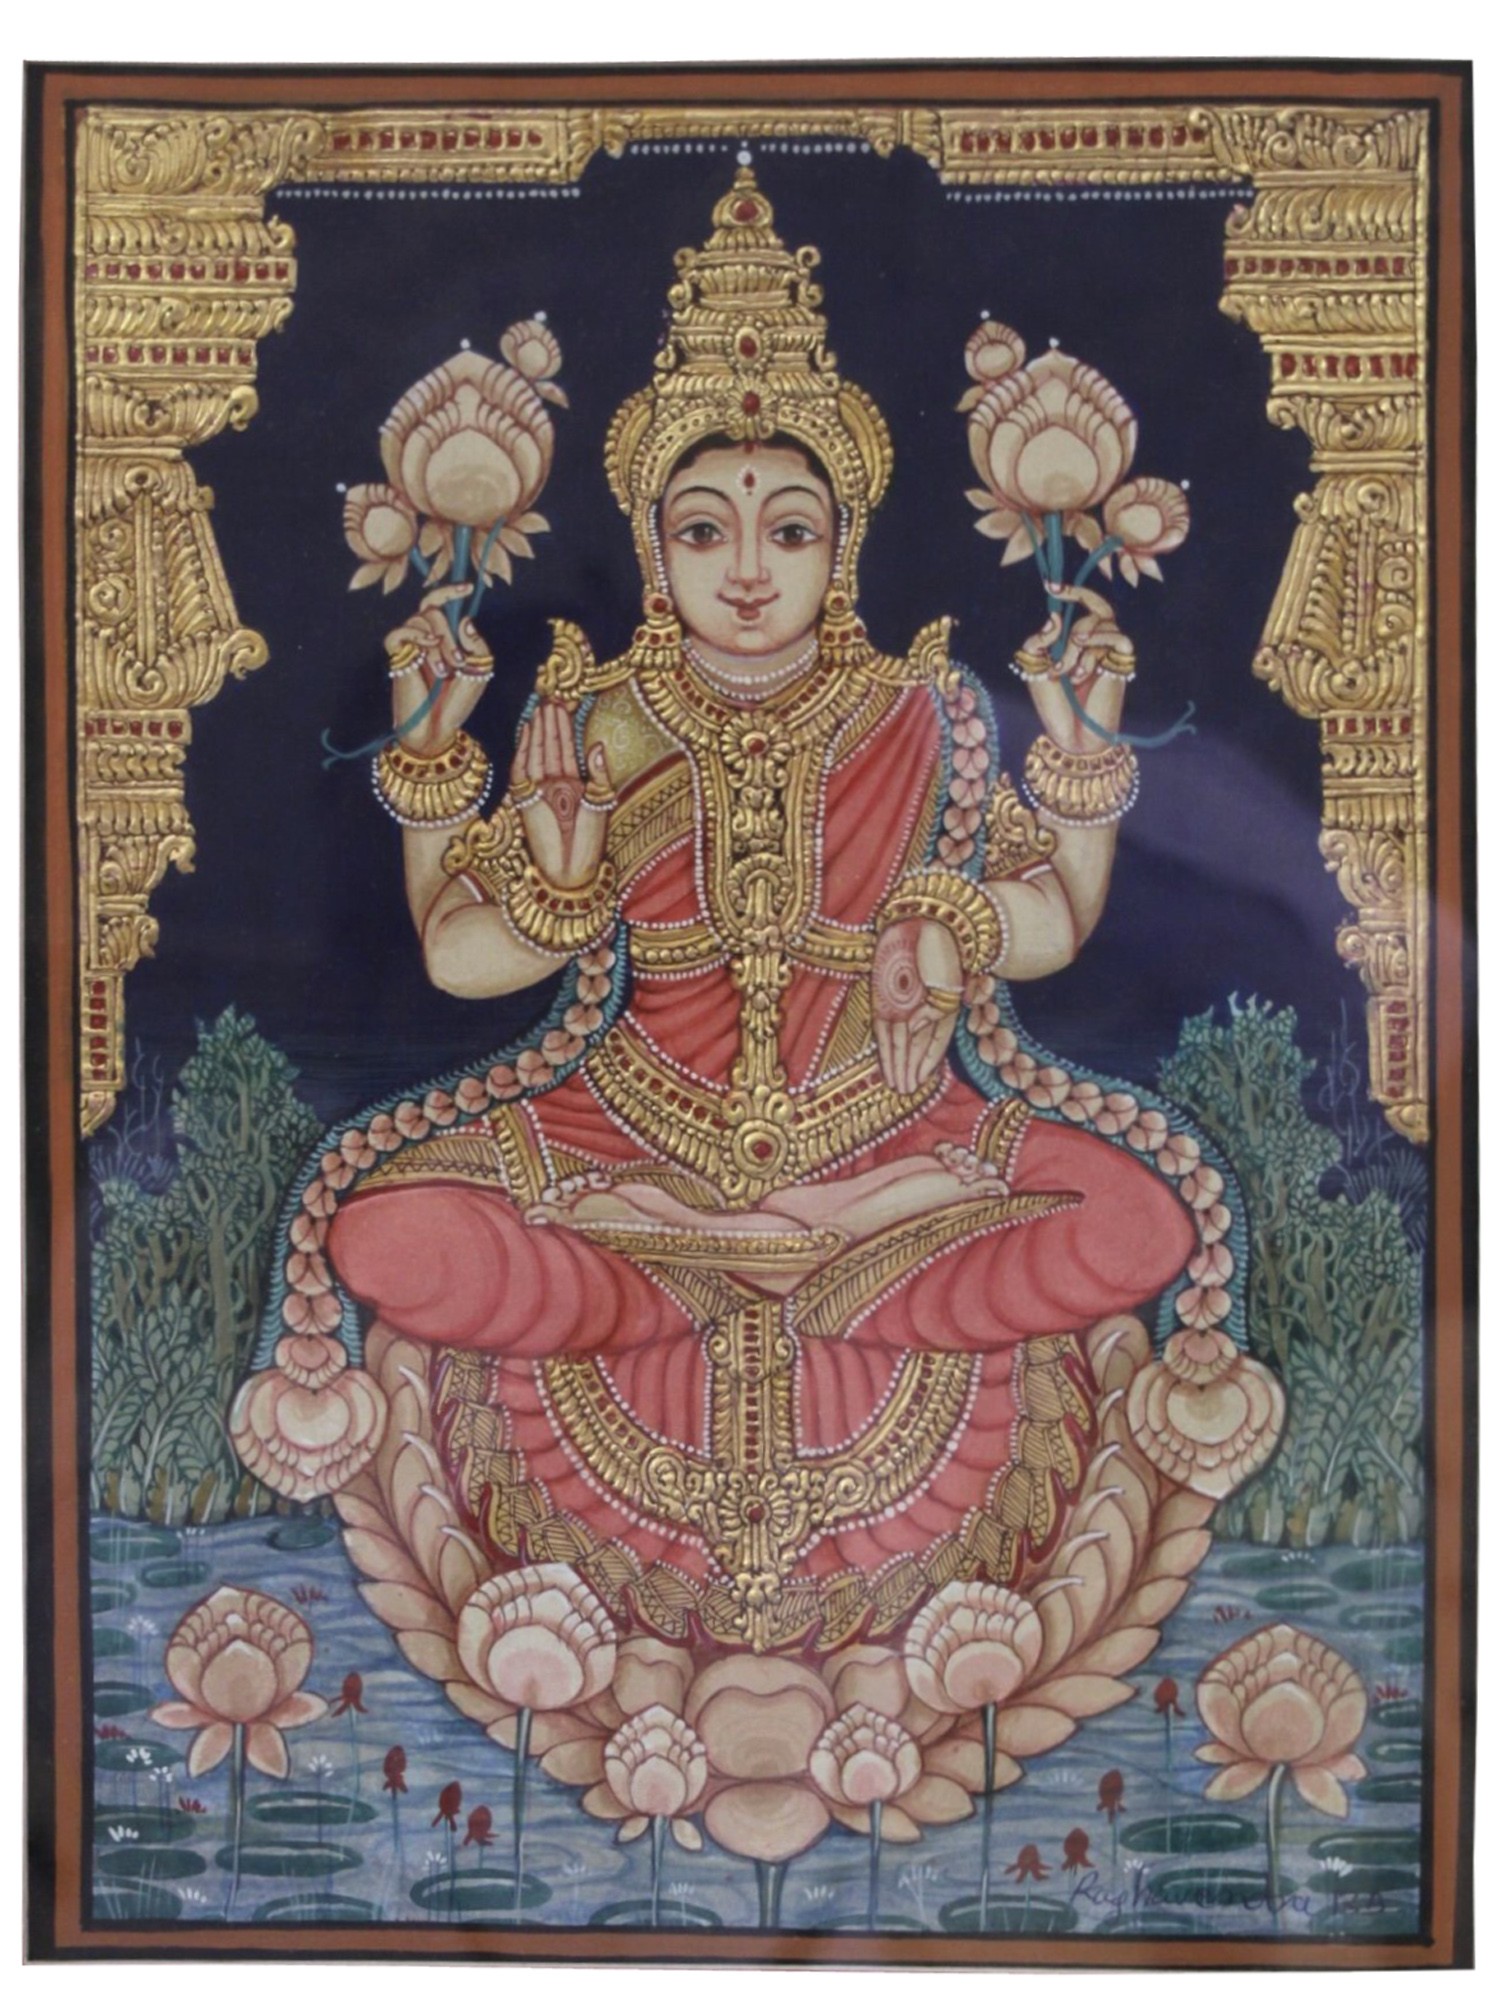 Part- 2 | Mata lakshmi 🙏 Realistic and Detailing work Ache se or Realistic  banane ki koshish kar rha hu or Detailing de rha hu agar... | Instagram